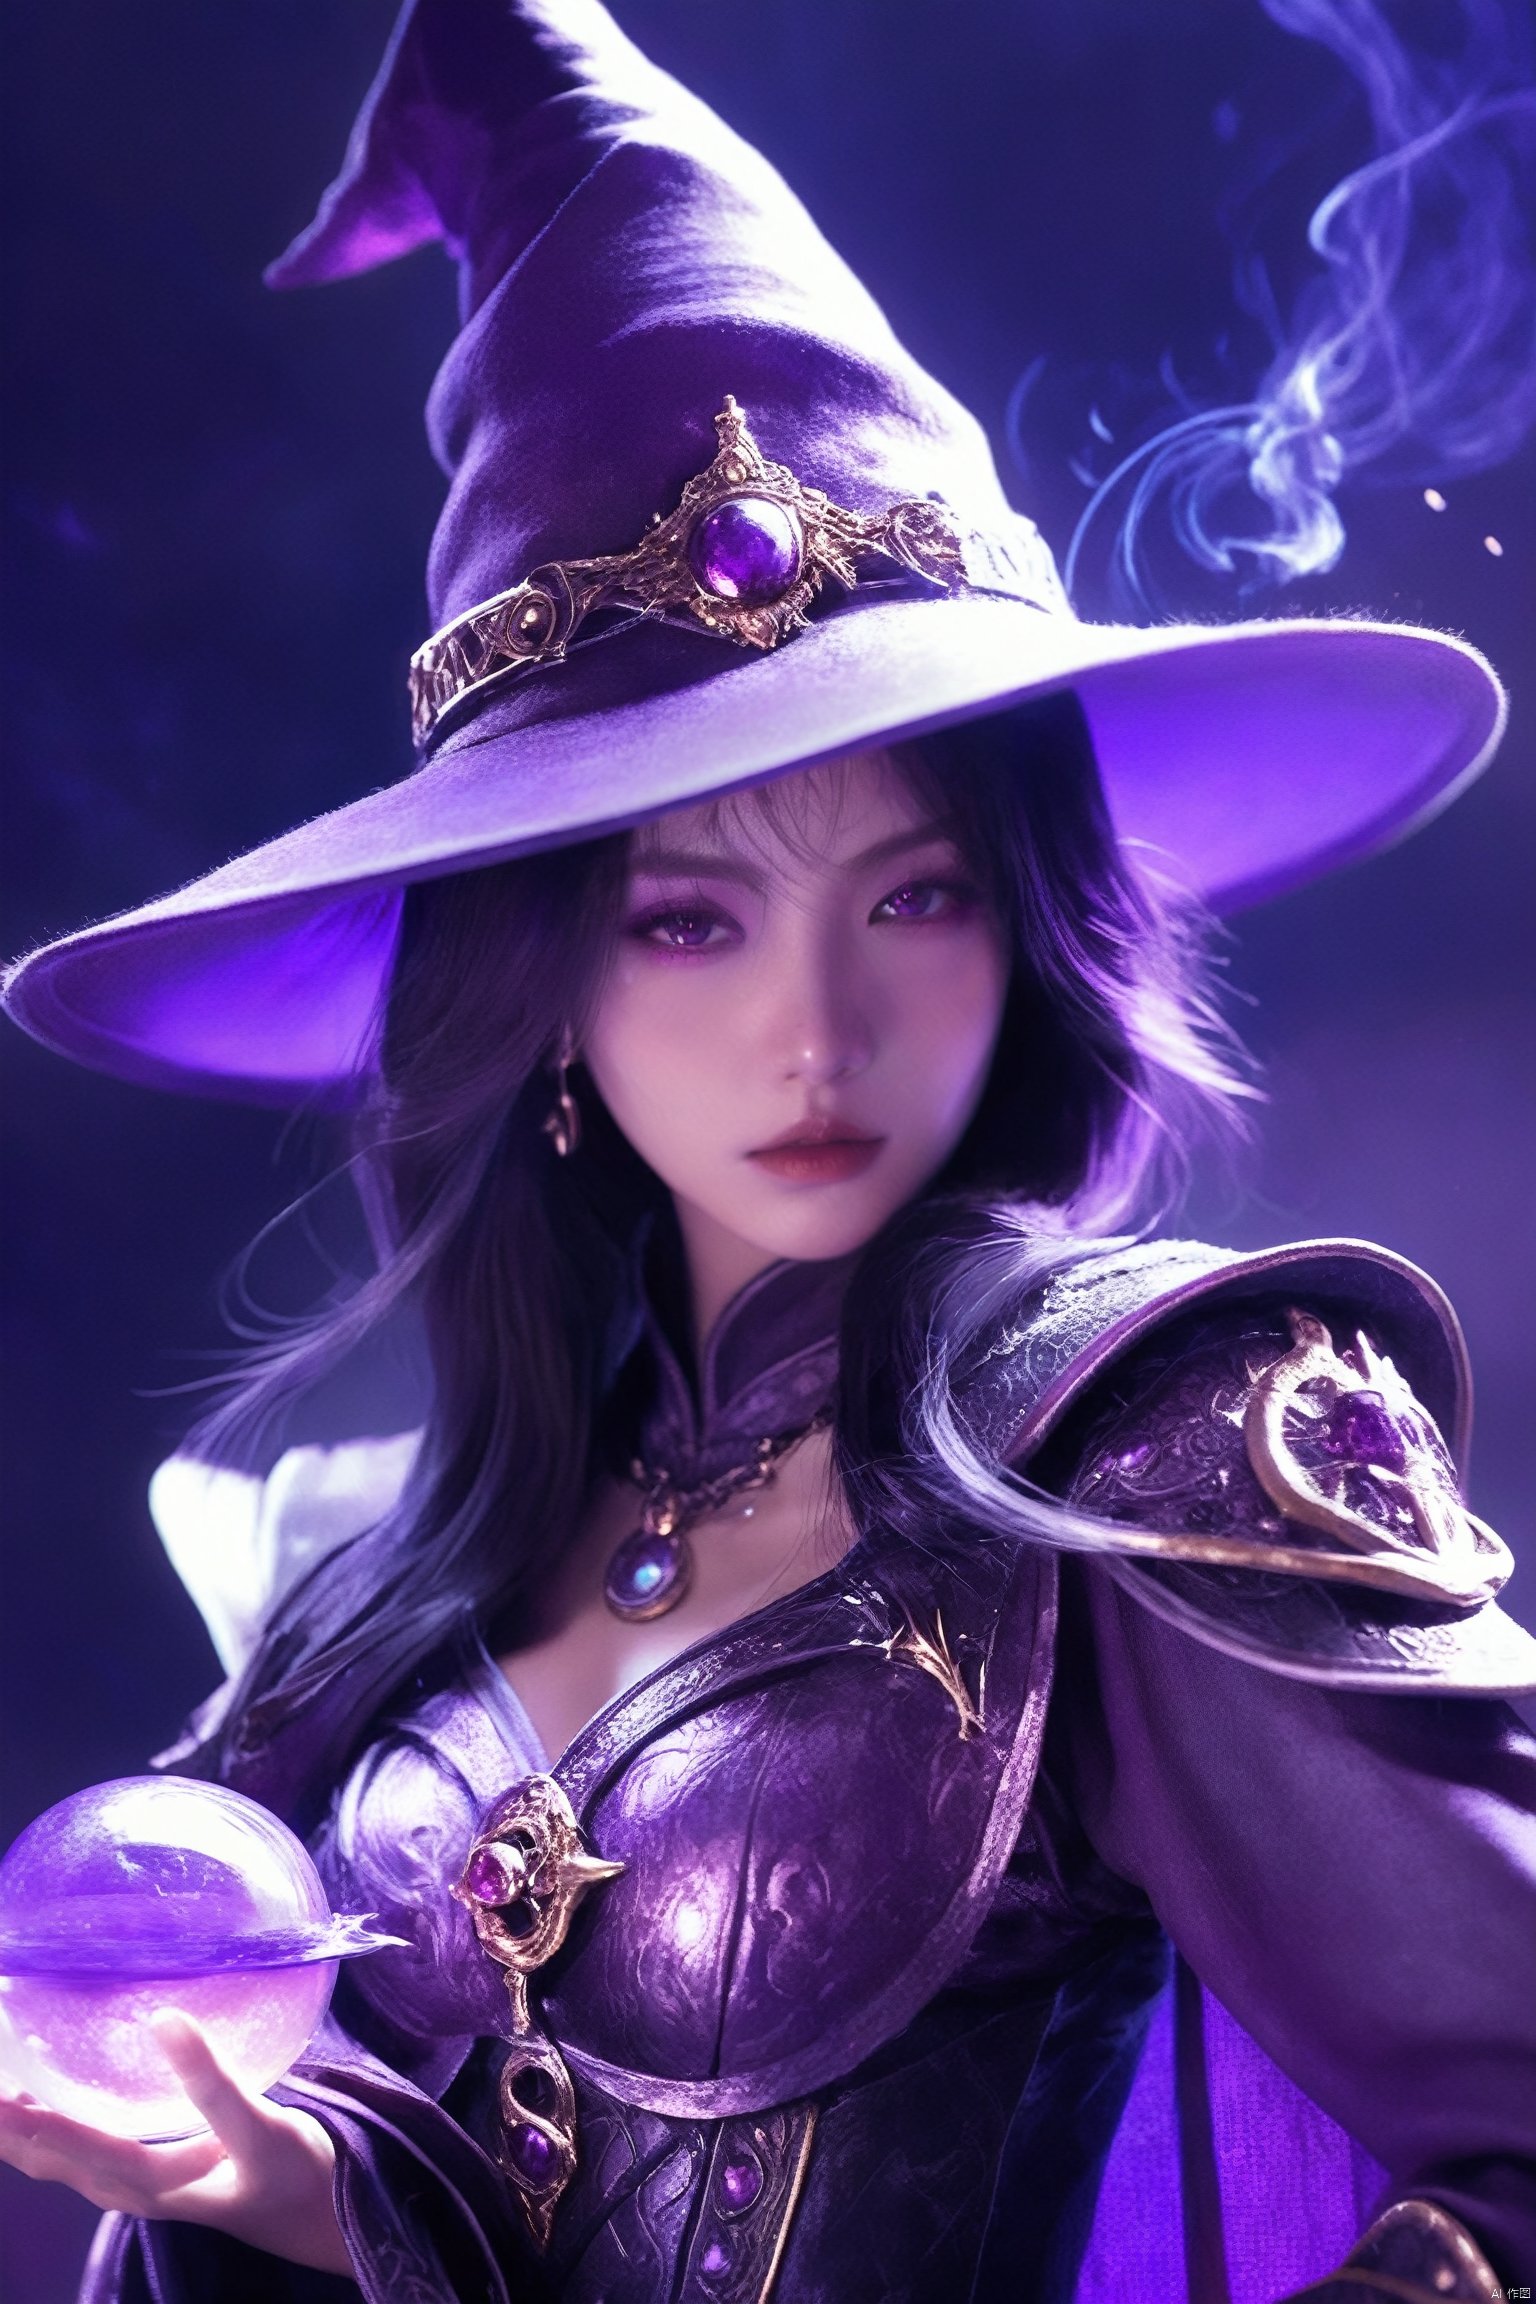  HUBG_Mecha_Armor, official art, 

(Witch, purple wizard's hat, shows purple potion:1.4), solo, hanfu,
magical light effects.
(purple medieval byzantine theme),
cowboy shot, (alive skin), HUBG_Beauty_Girl